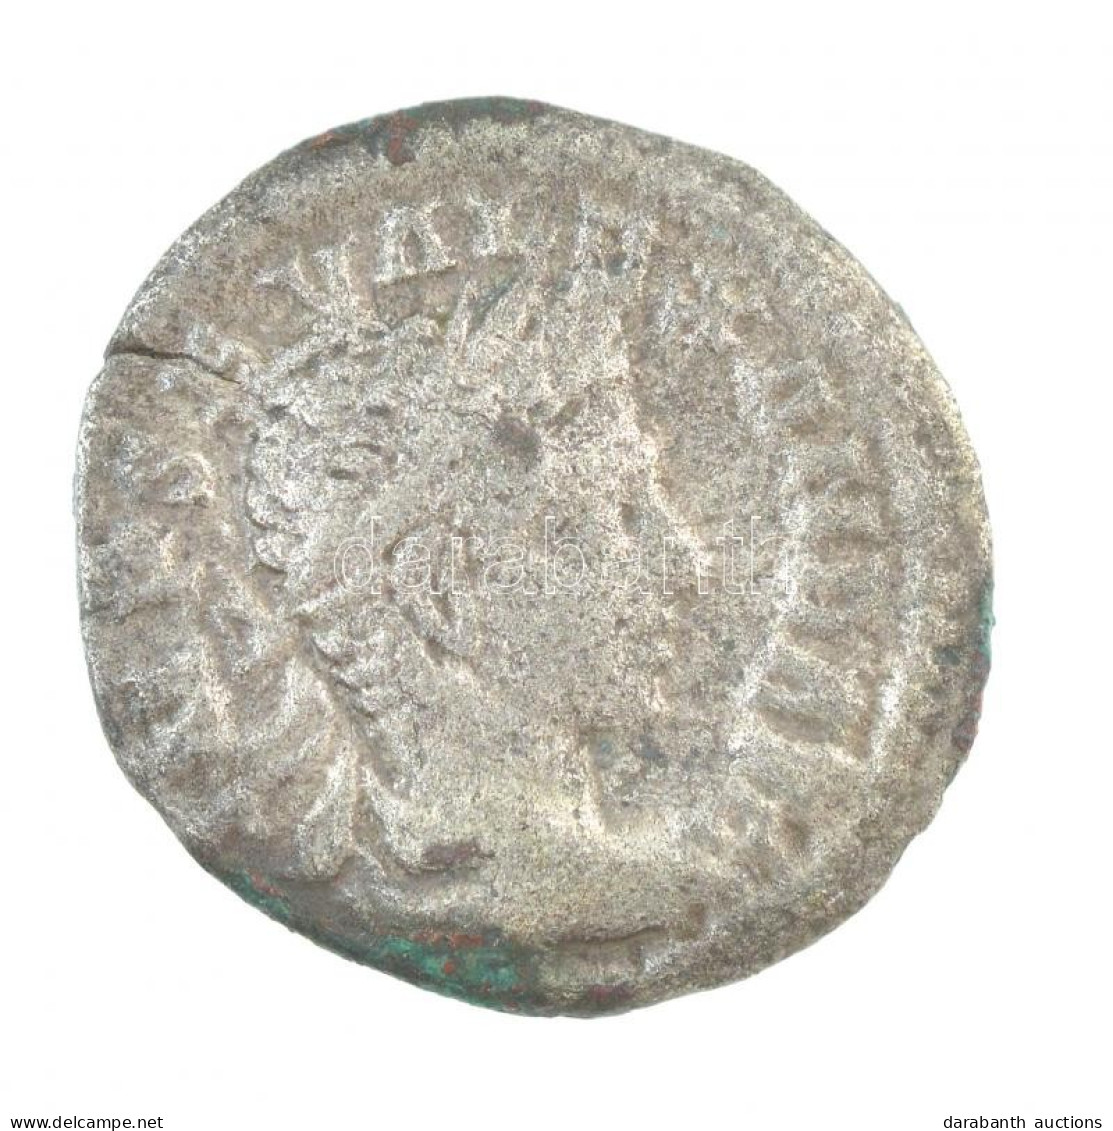 Római Birodalom / Antiochia / Severus Alexander 222-230. Denarius Ag (2,24g) T:2- Patina Roman Empire / Antiochia / Seve - Unclassified